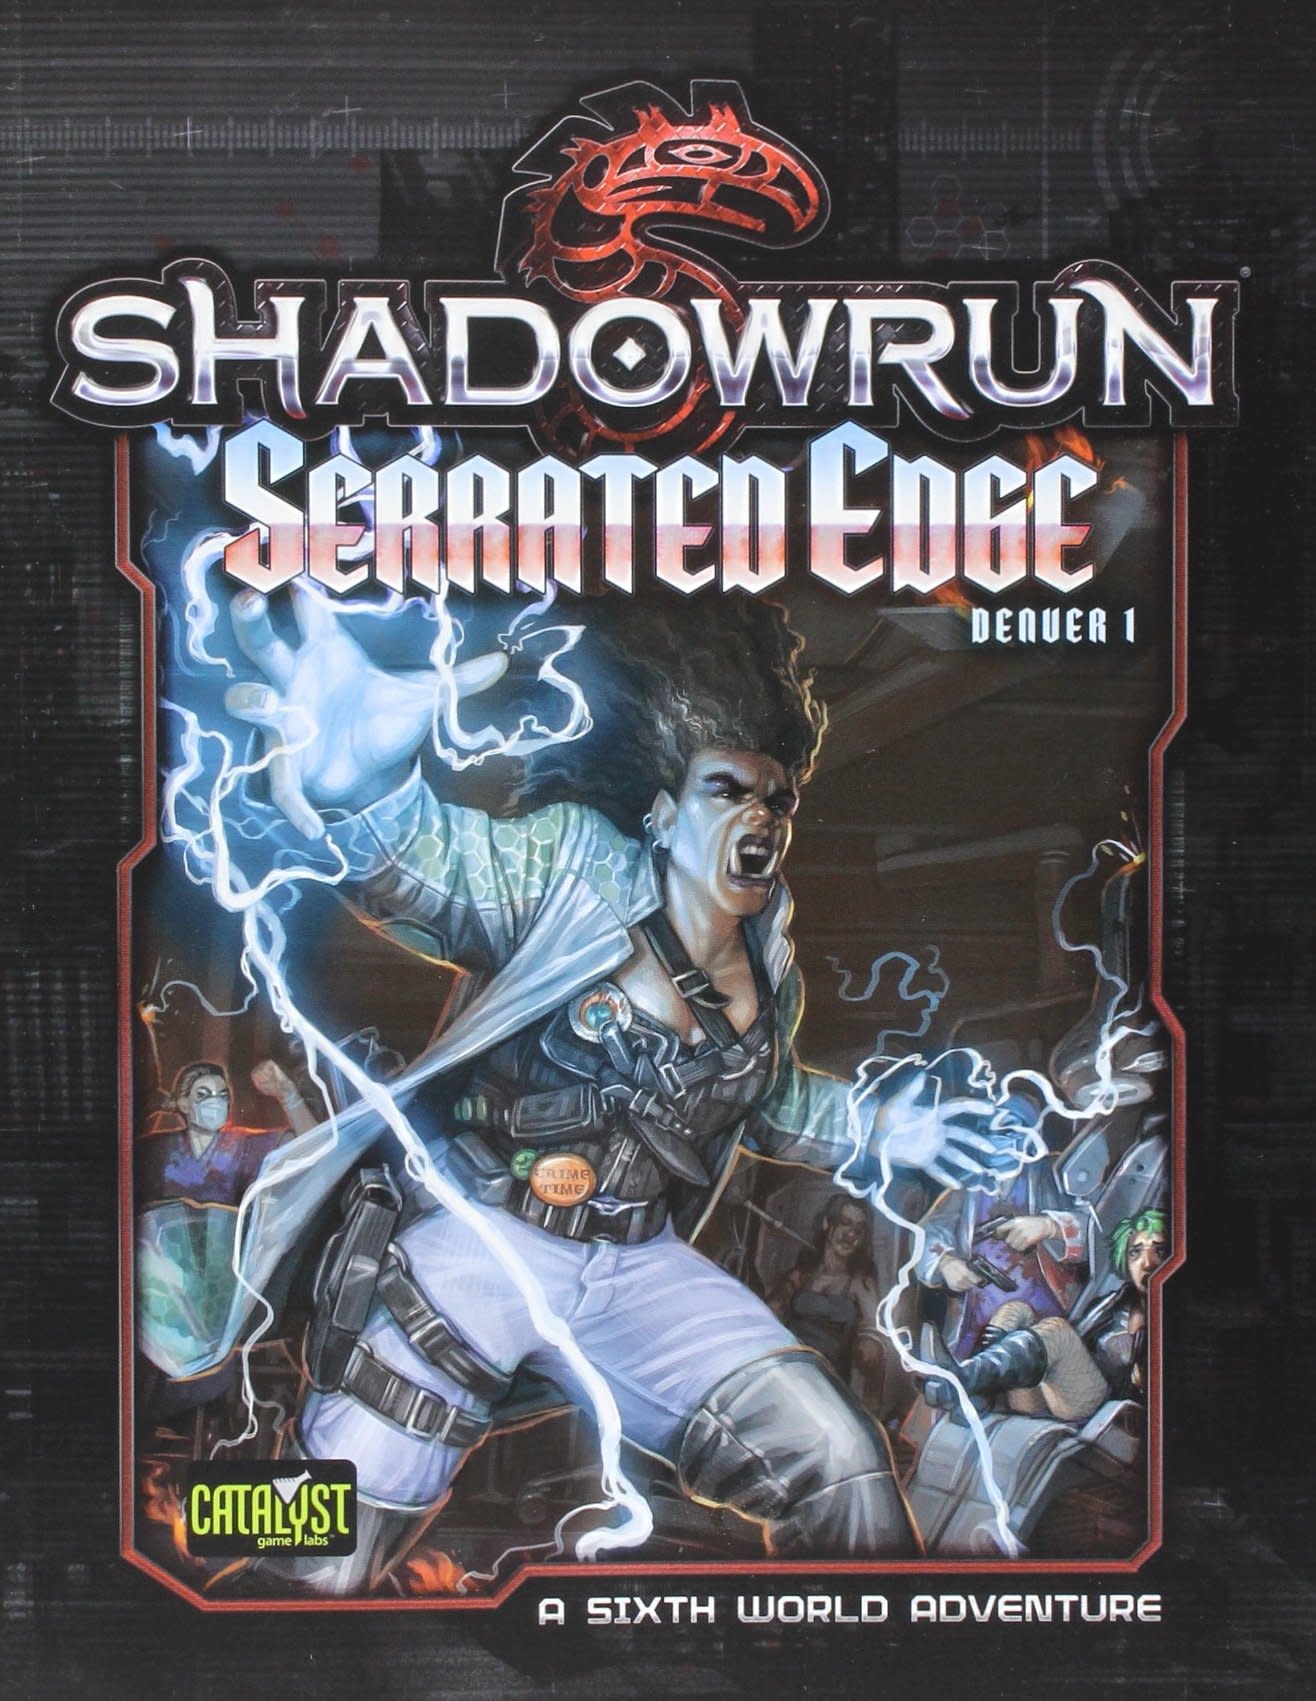 Shadowrun RPG - Catalyst Game Labs